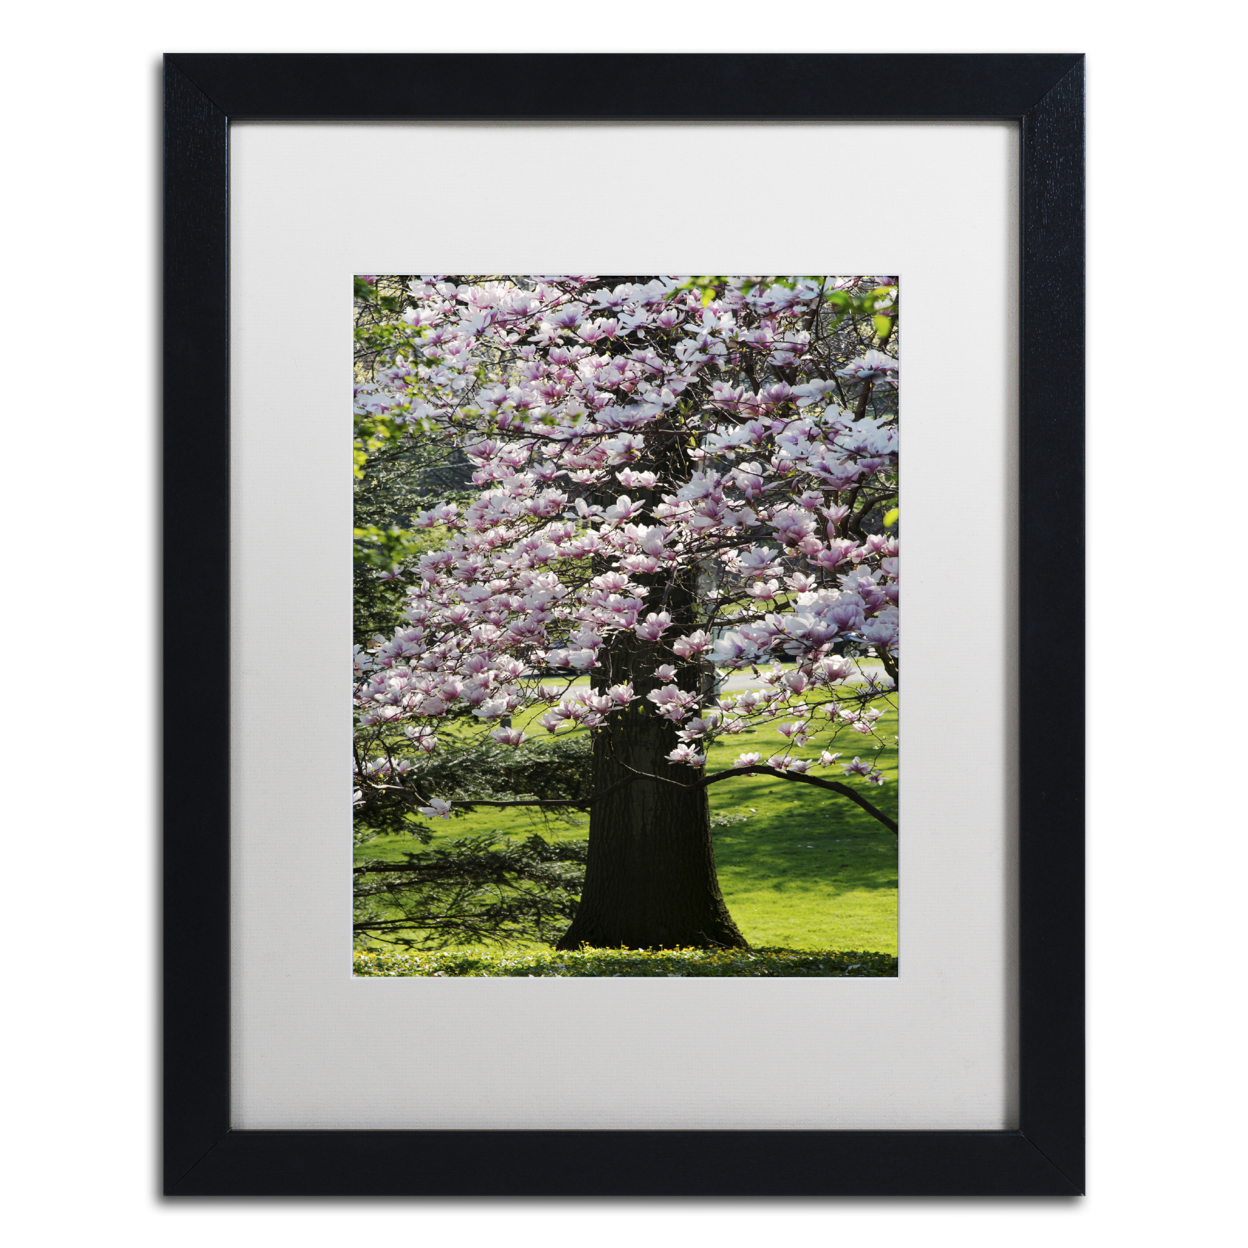 Kurt Shaffer 'Spring Magnolia' Black Wooden Framed Art 18 X 22 Inches